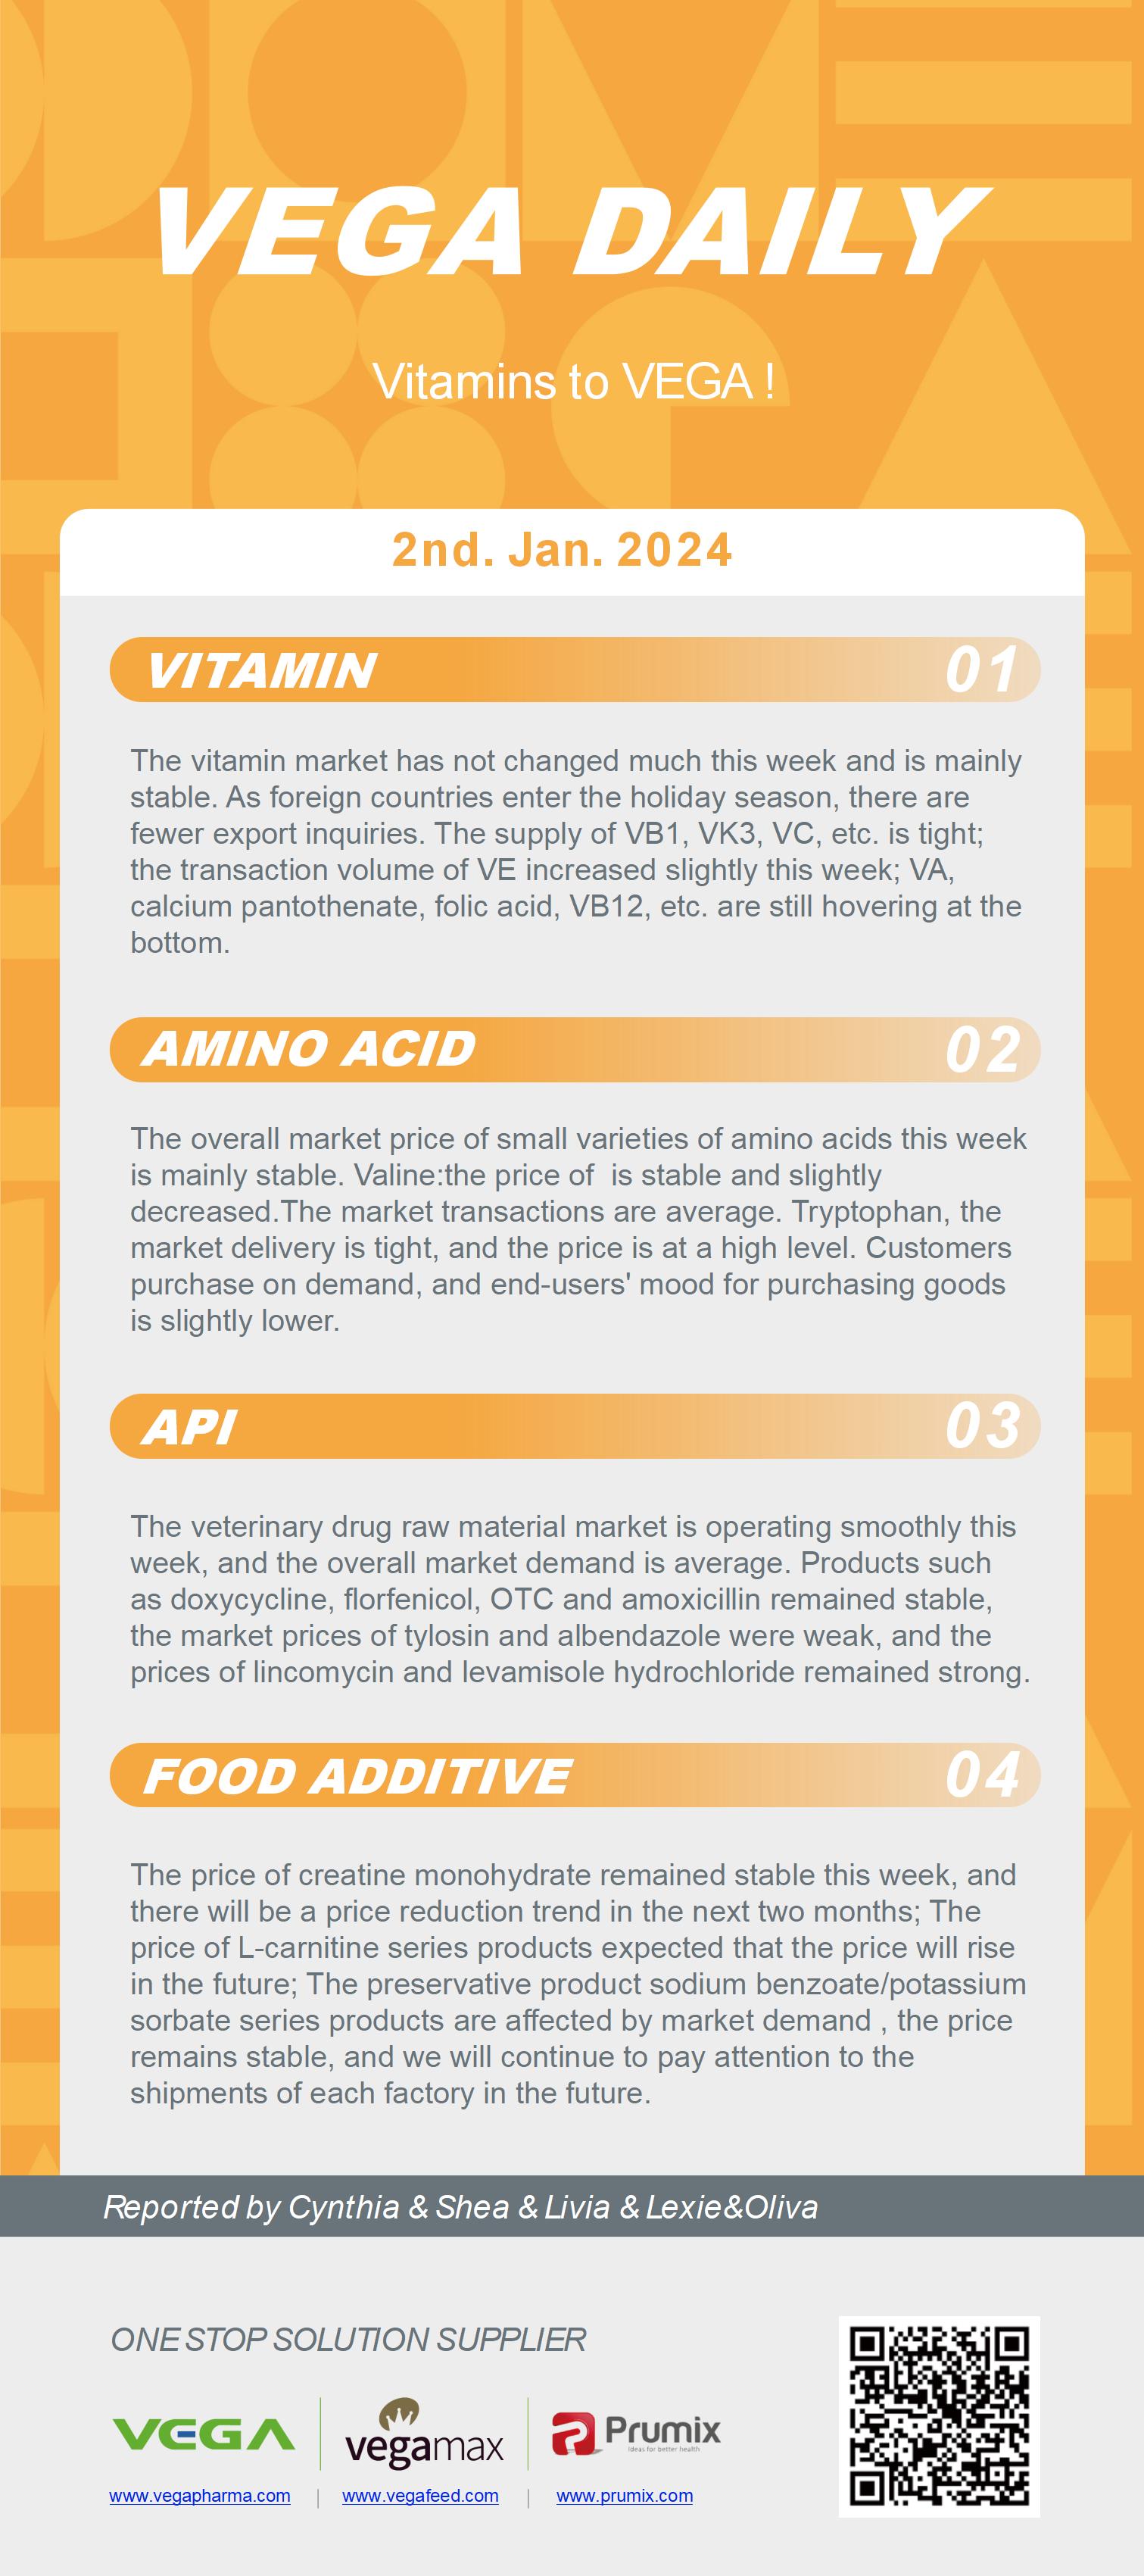 Vega Daily Dated on Jan 2nd 2024 Vitamin Amino Acid APl Food Additives.jpg